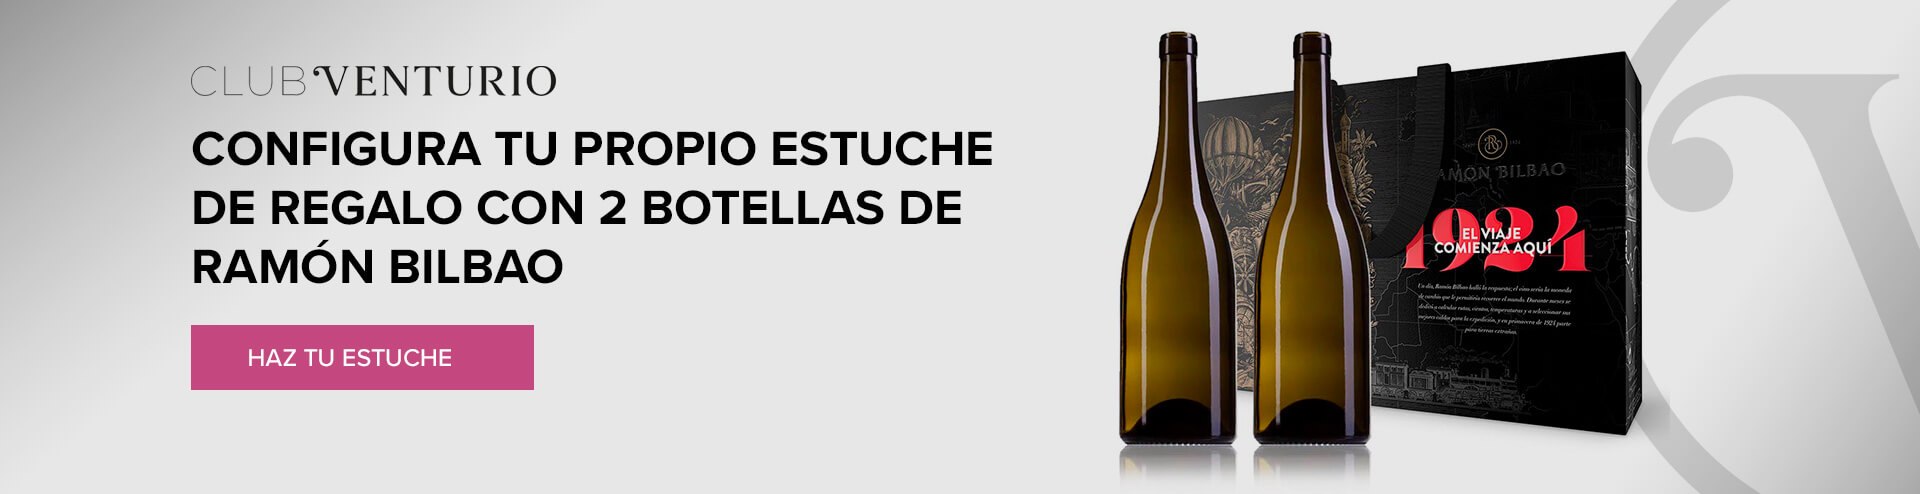 Configura tu propio estuche de regalo con 2 botellas de Ramón Bilbao